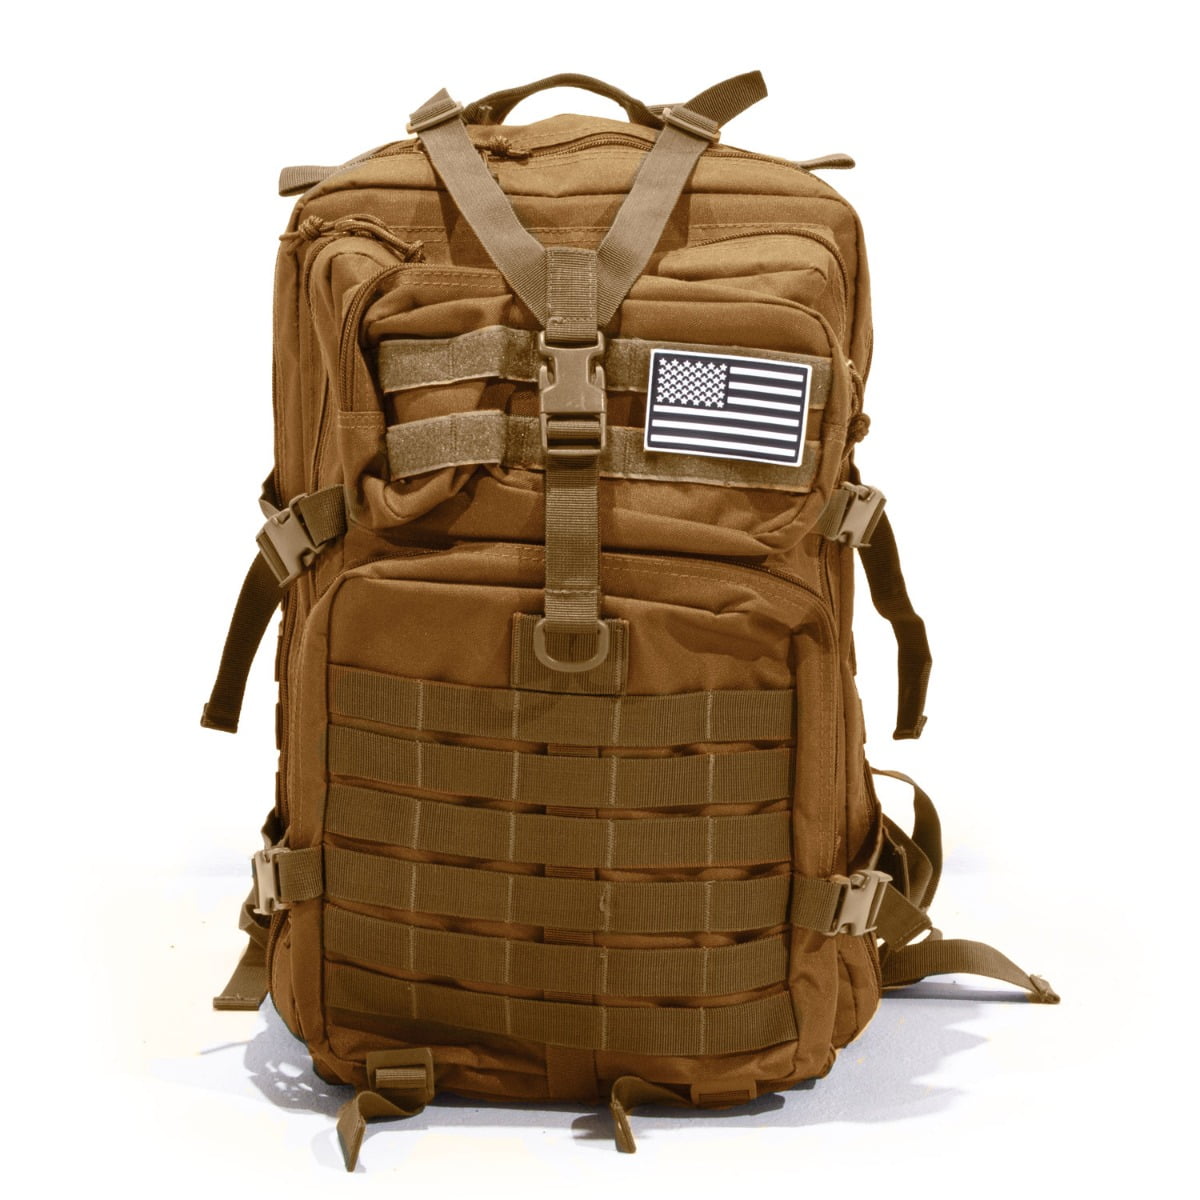 HUNTSEN Military Tactical Backpack Large Army 3 Day Assault Pack Molle Bag Backpacks for Men Camping Hiking Trekking Daypack Khaki 